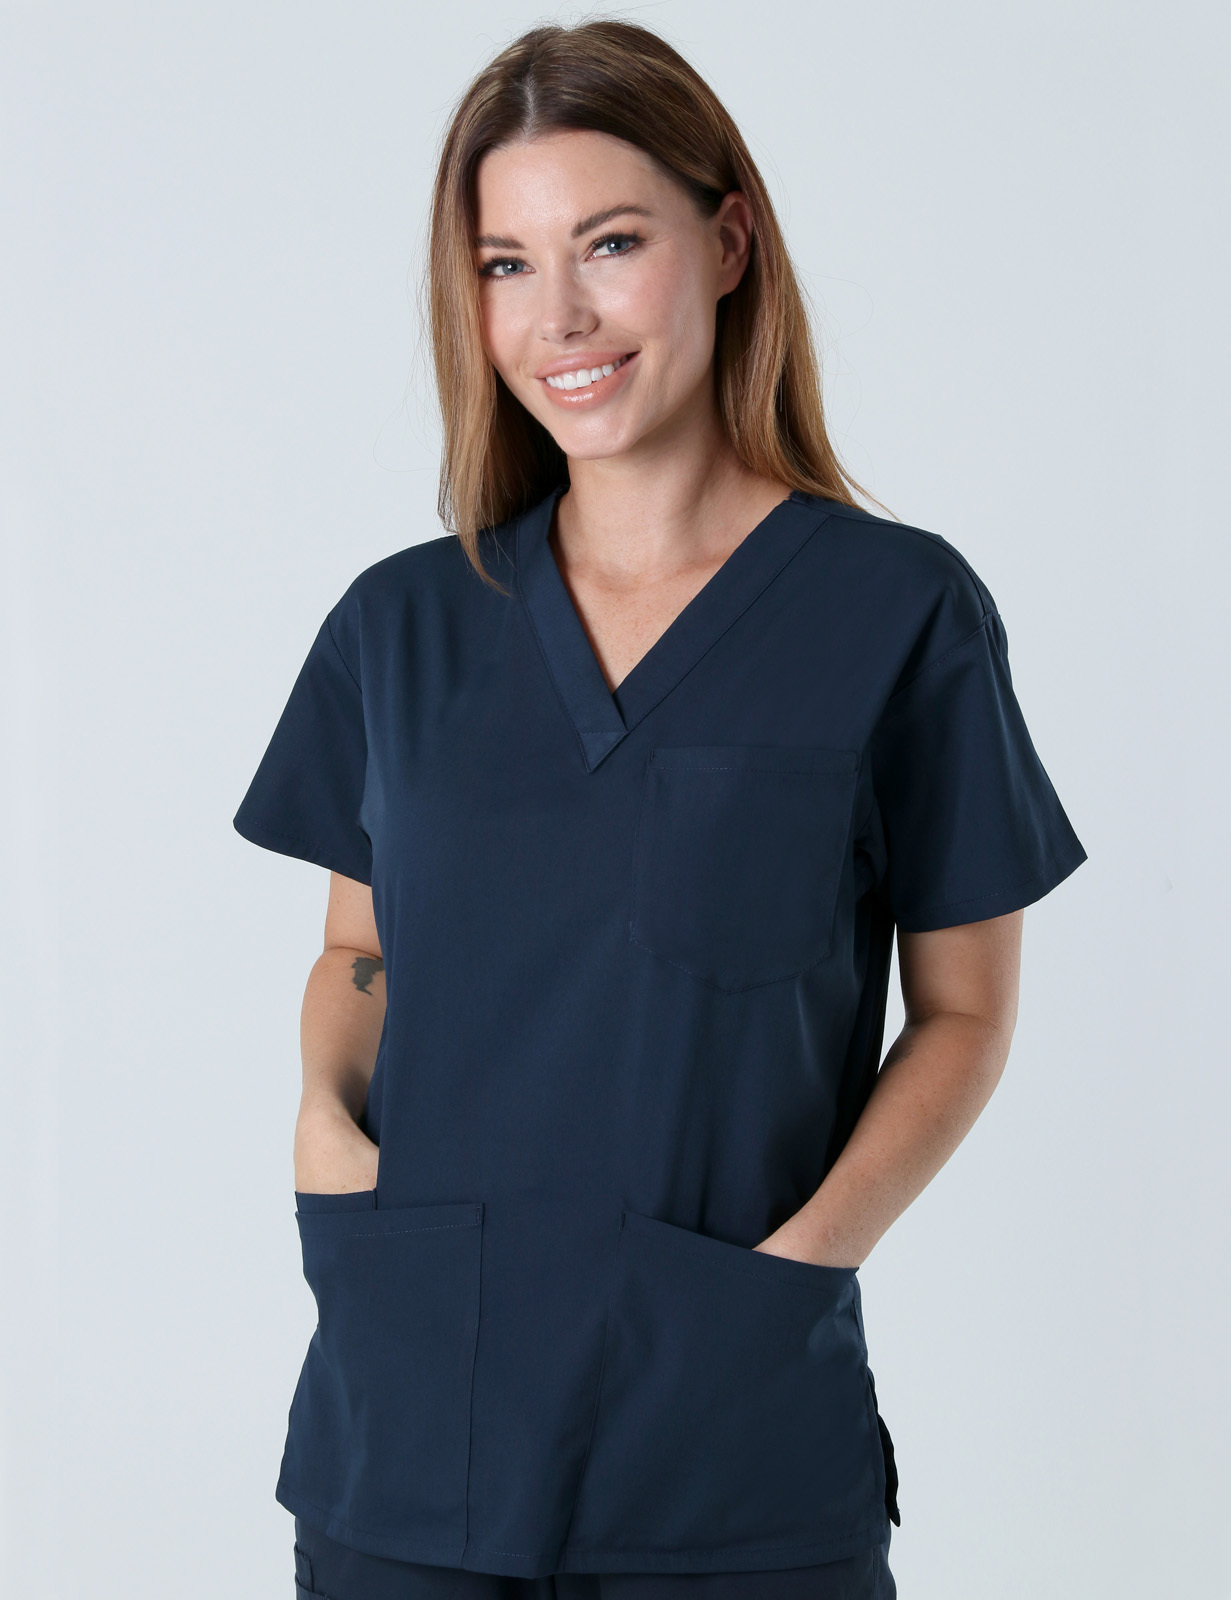 Monash Health - Women's Doctor (4 Pocket Scrub Top and Cargo Pants in Navy incl Logos)